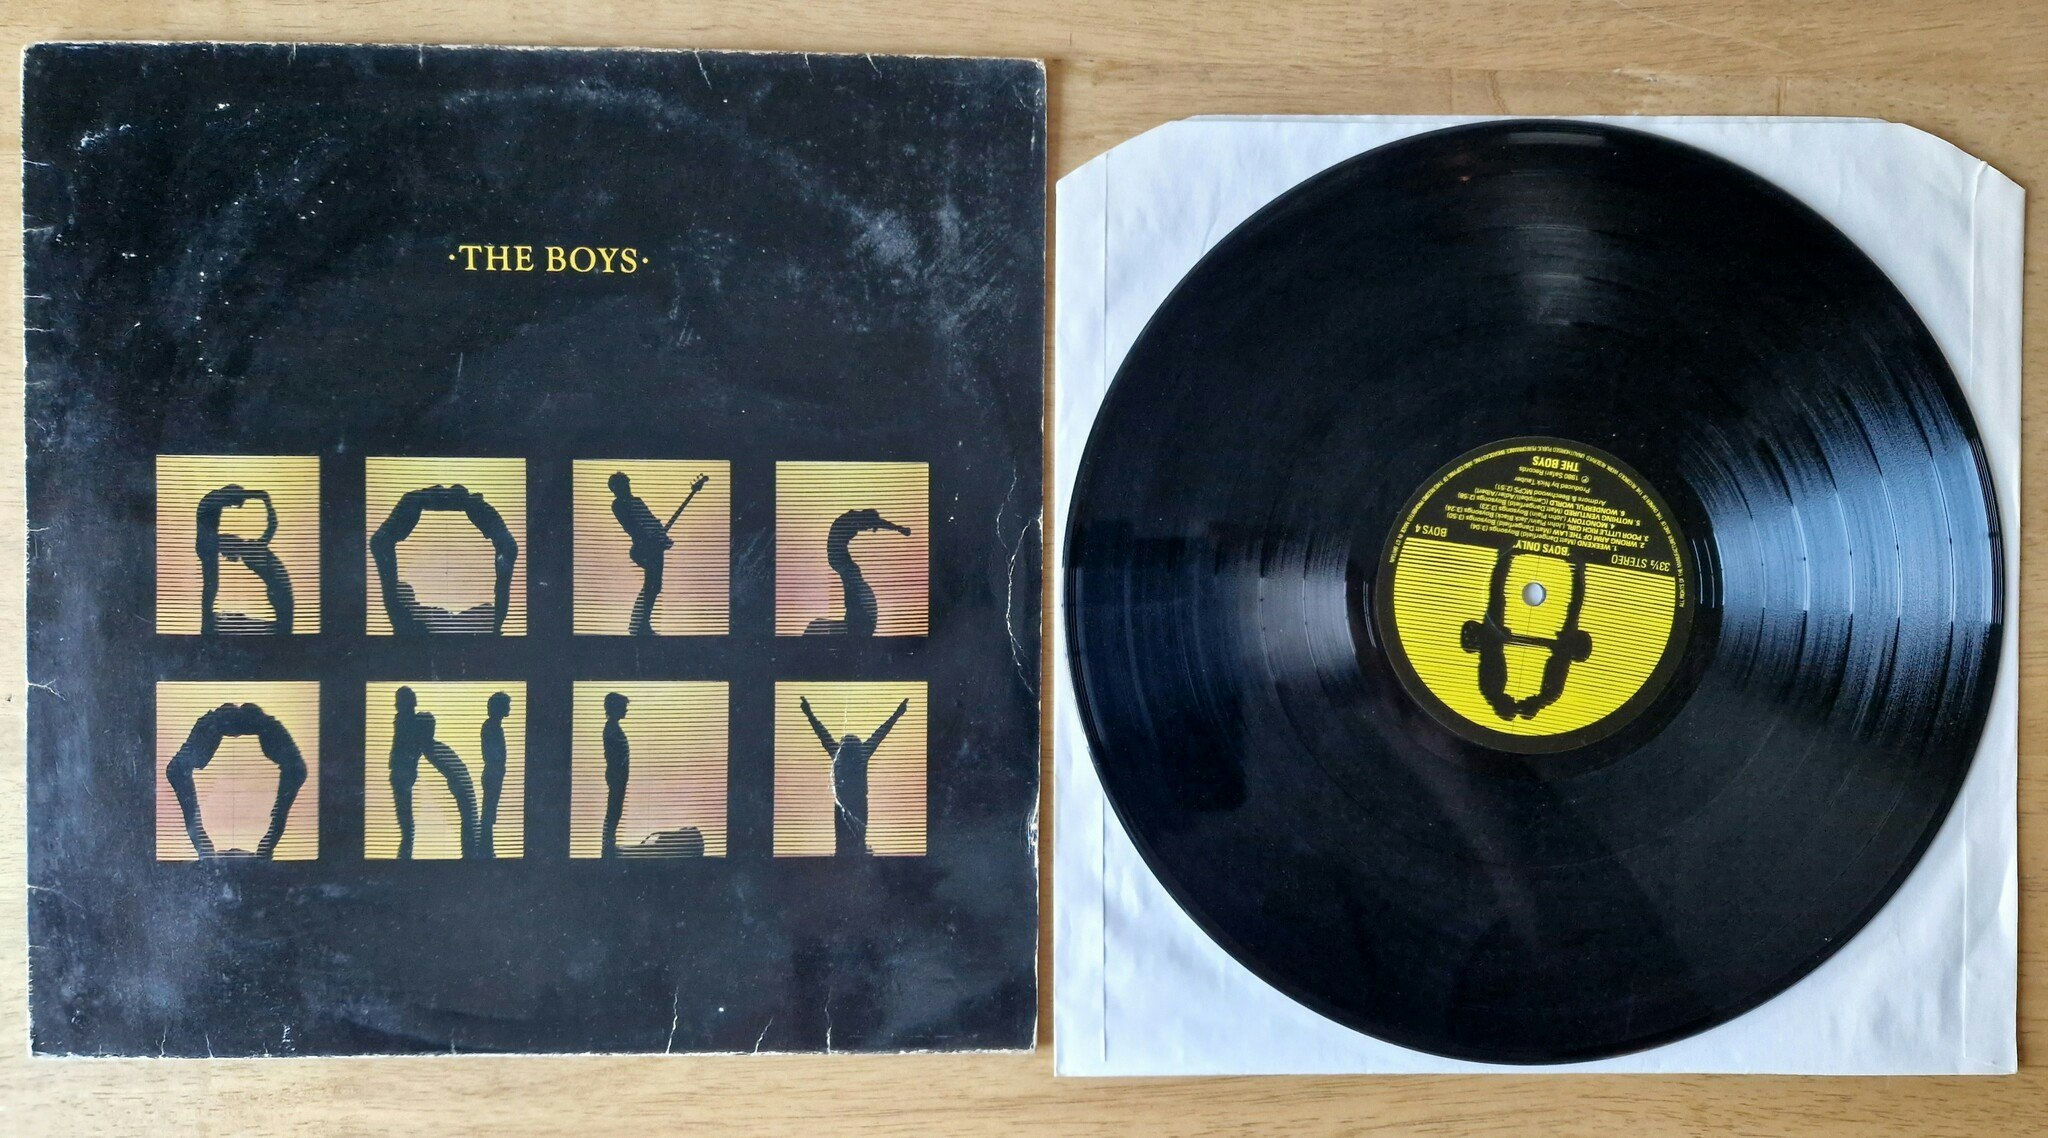 The Boys, Boys only. Vinyl LP